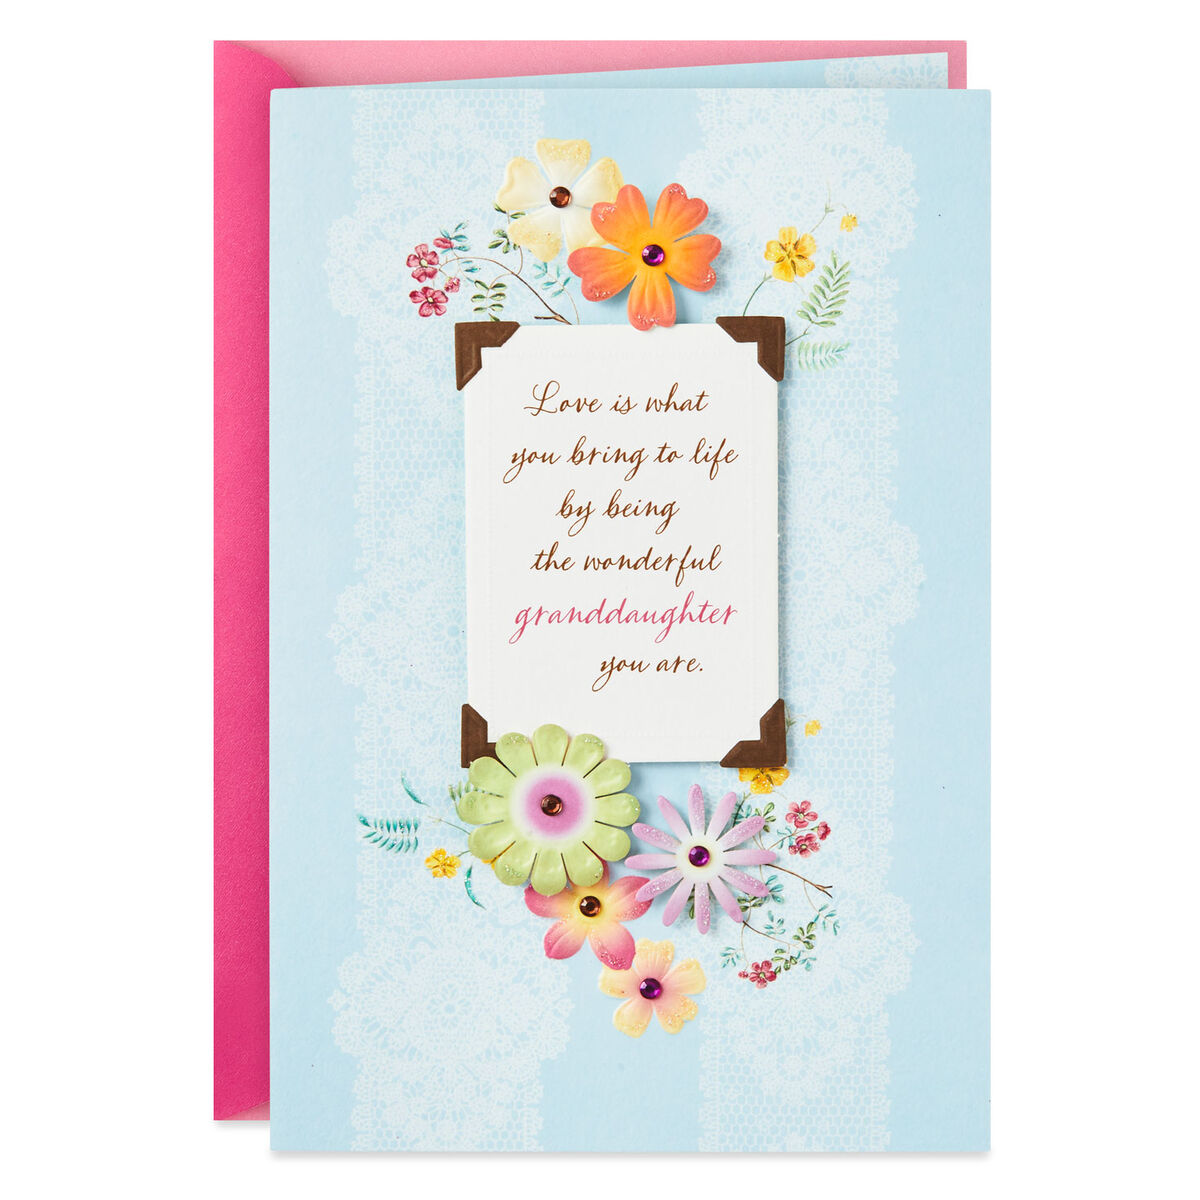 Wonderful Granddaughter Birthday Card - Greeting Cards - Hallmark